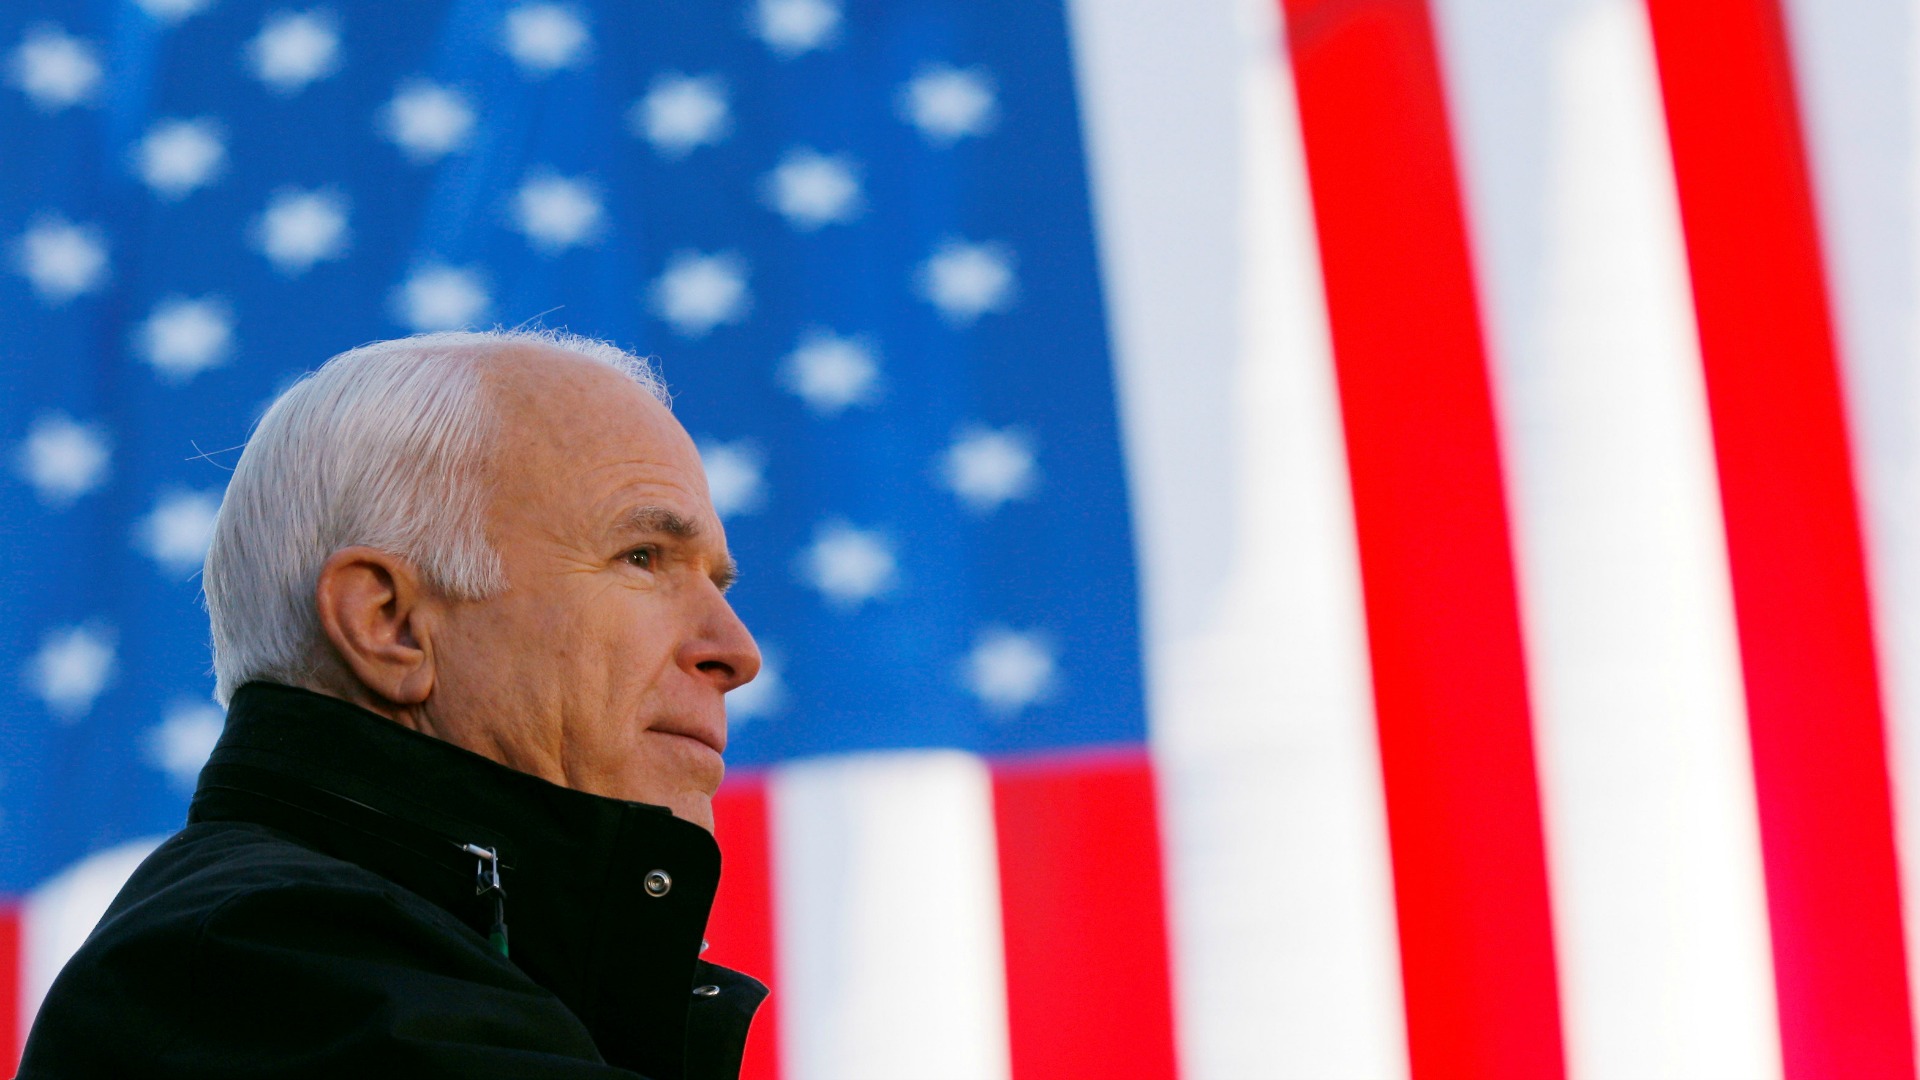 El senador estadounidense John McCain padece cáncer cerebral